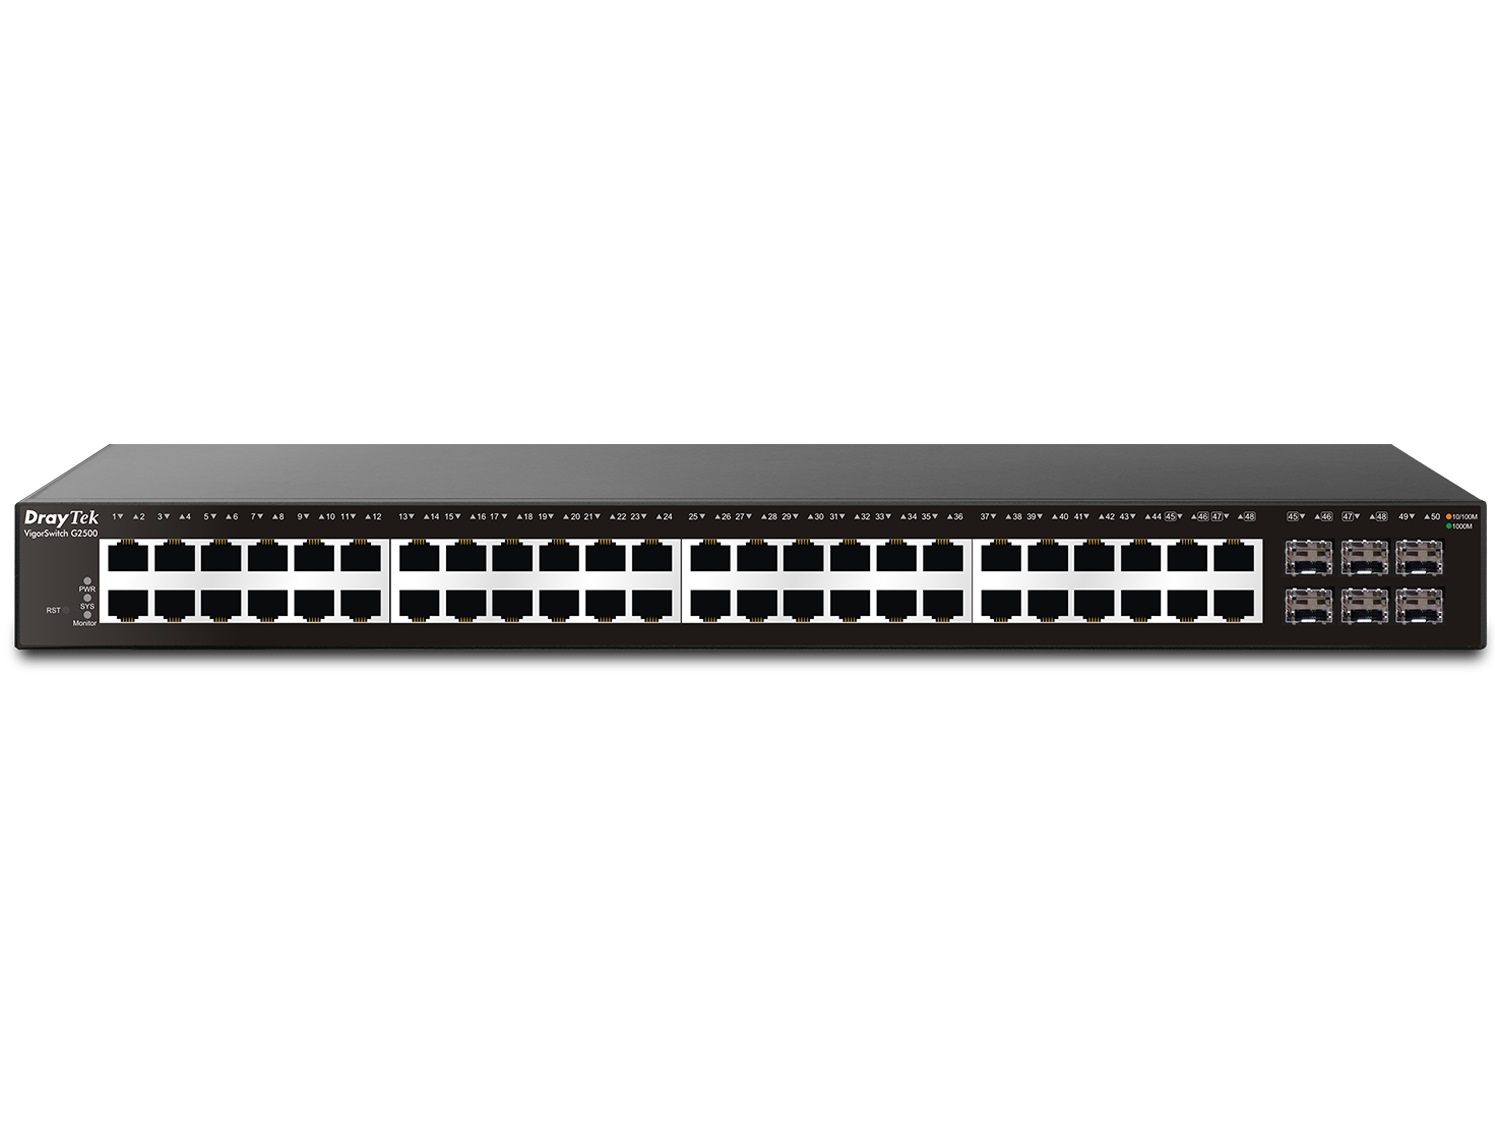 (Special) Draytek VigorSG2500 44-port L2 Switch 4 Combo Gigabit SFP/RJ-45 ports, 2SFP Slot, 802.1q tag-based VLAN, QoS, IPv4/IPv6 management